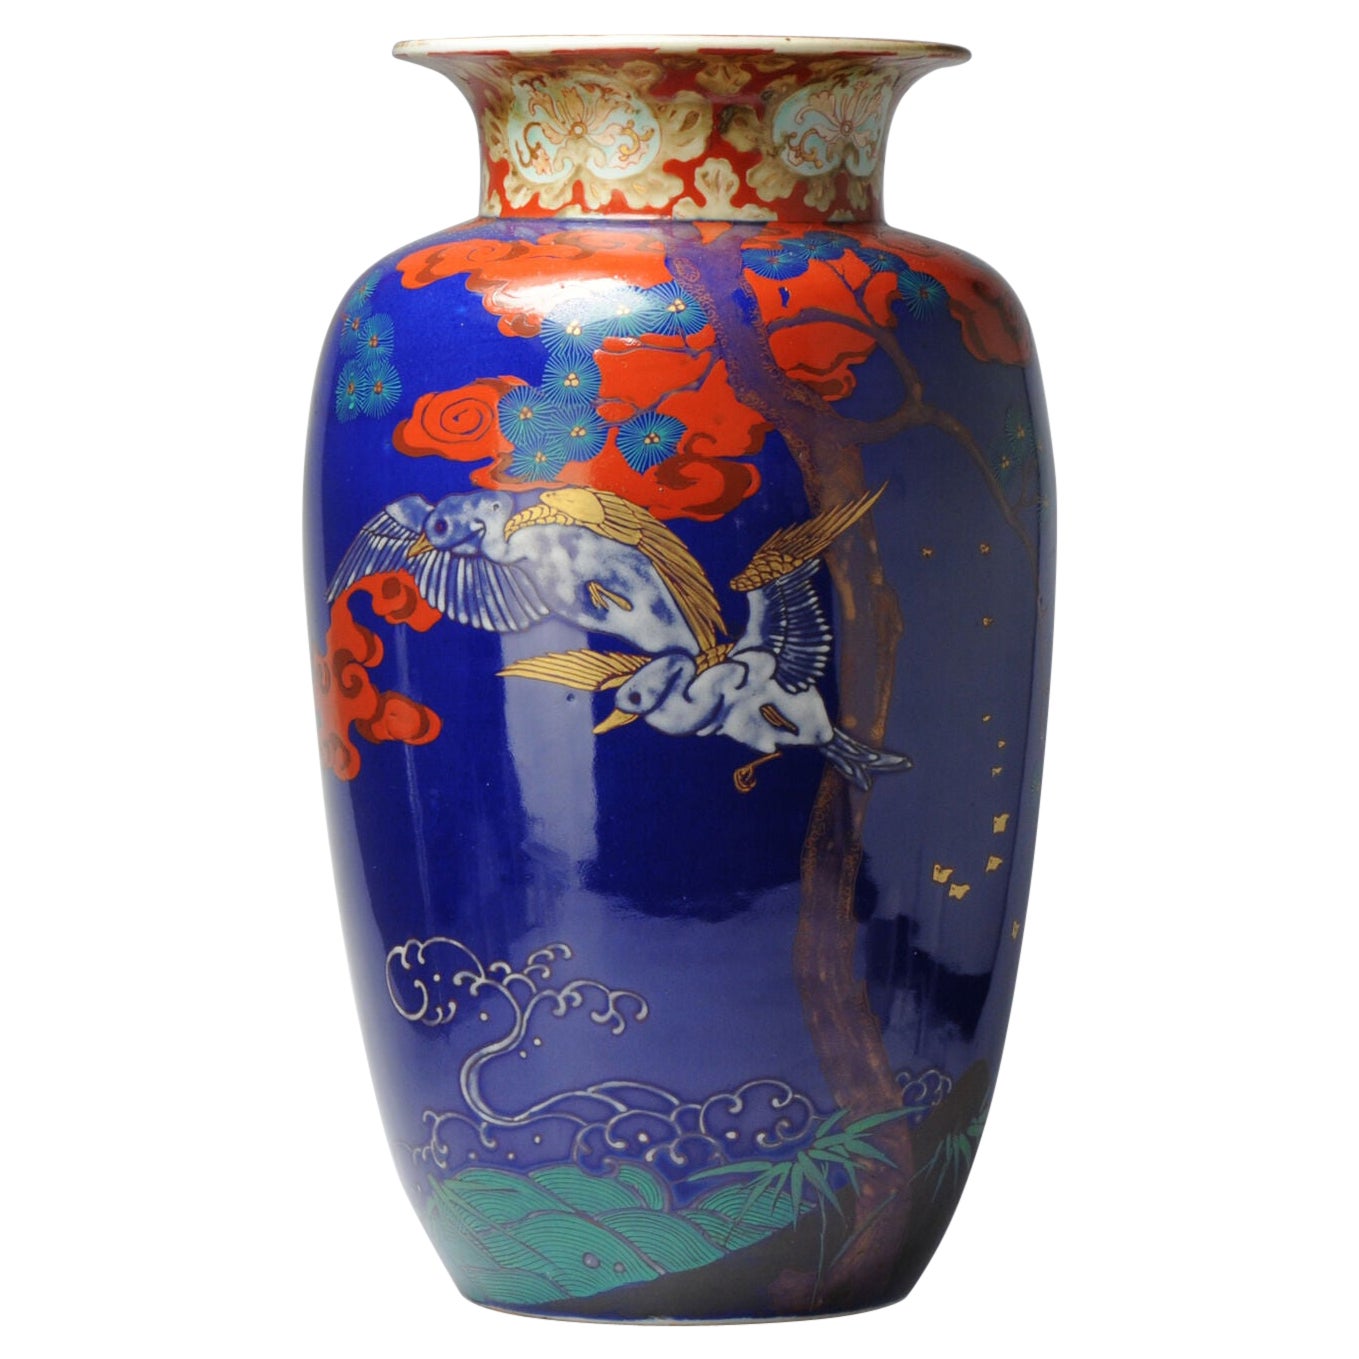 Seltene antike japanische Porzellanvase, markiert Hichozan, 19. Jahrhundert